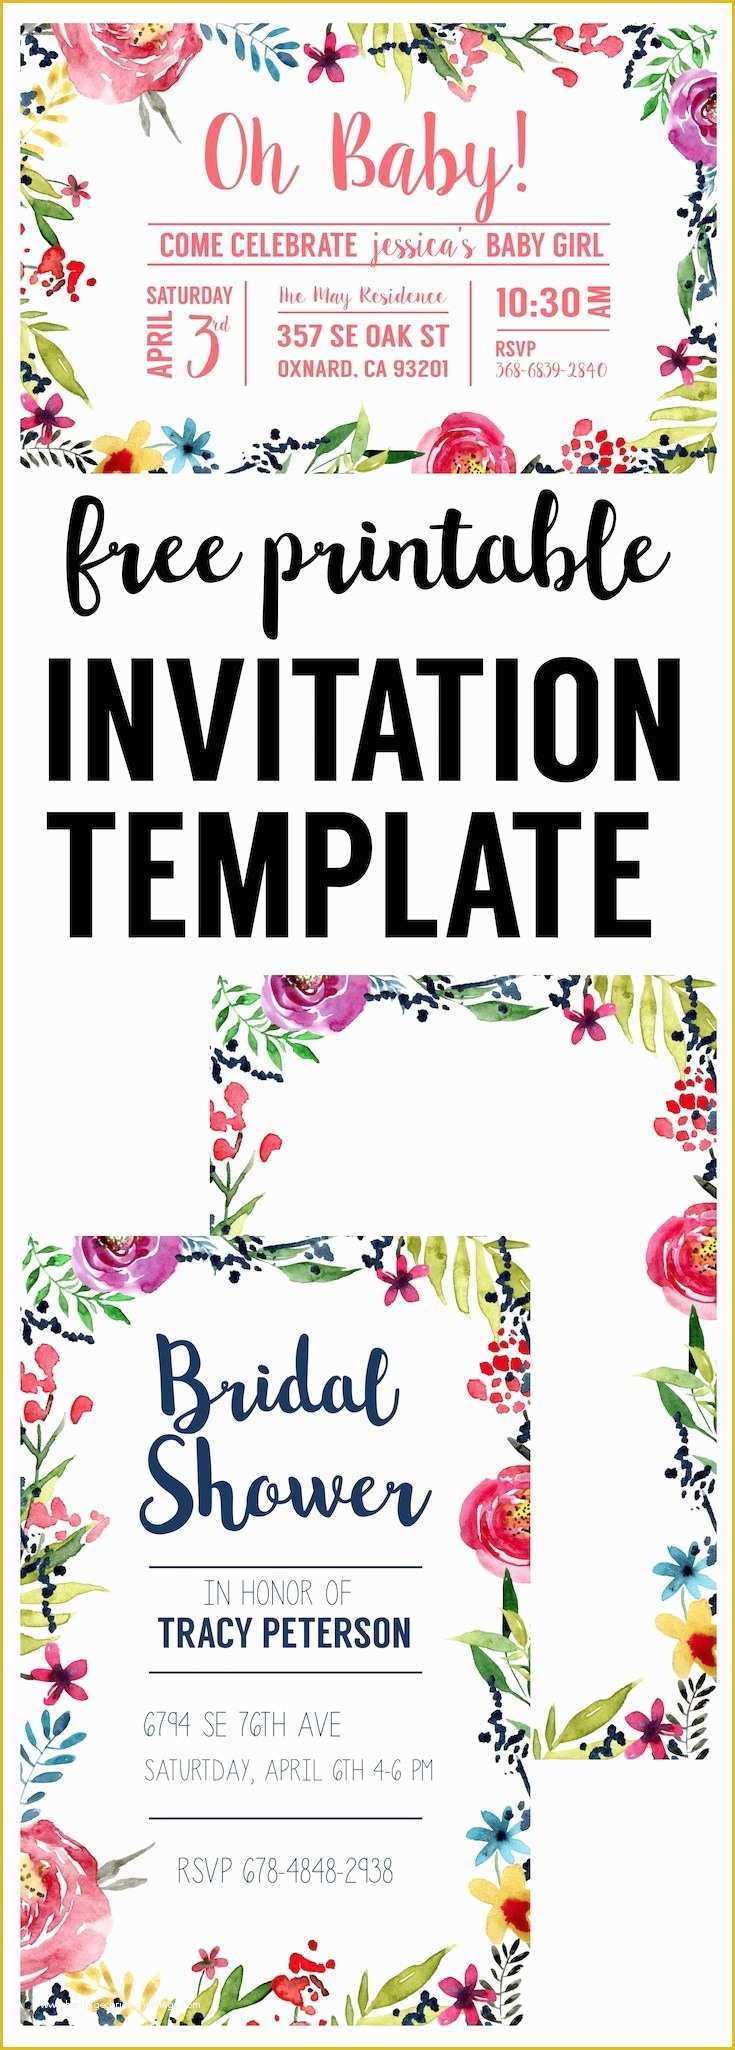 Free Birthday Invitations Templates to Print Of Floral Borders Invitations Free Printable Invitation